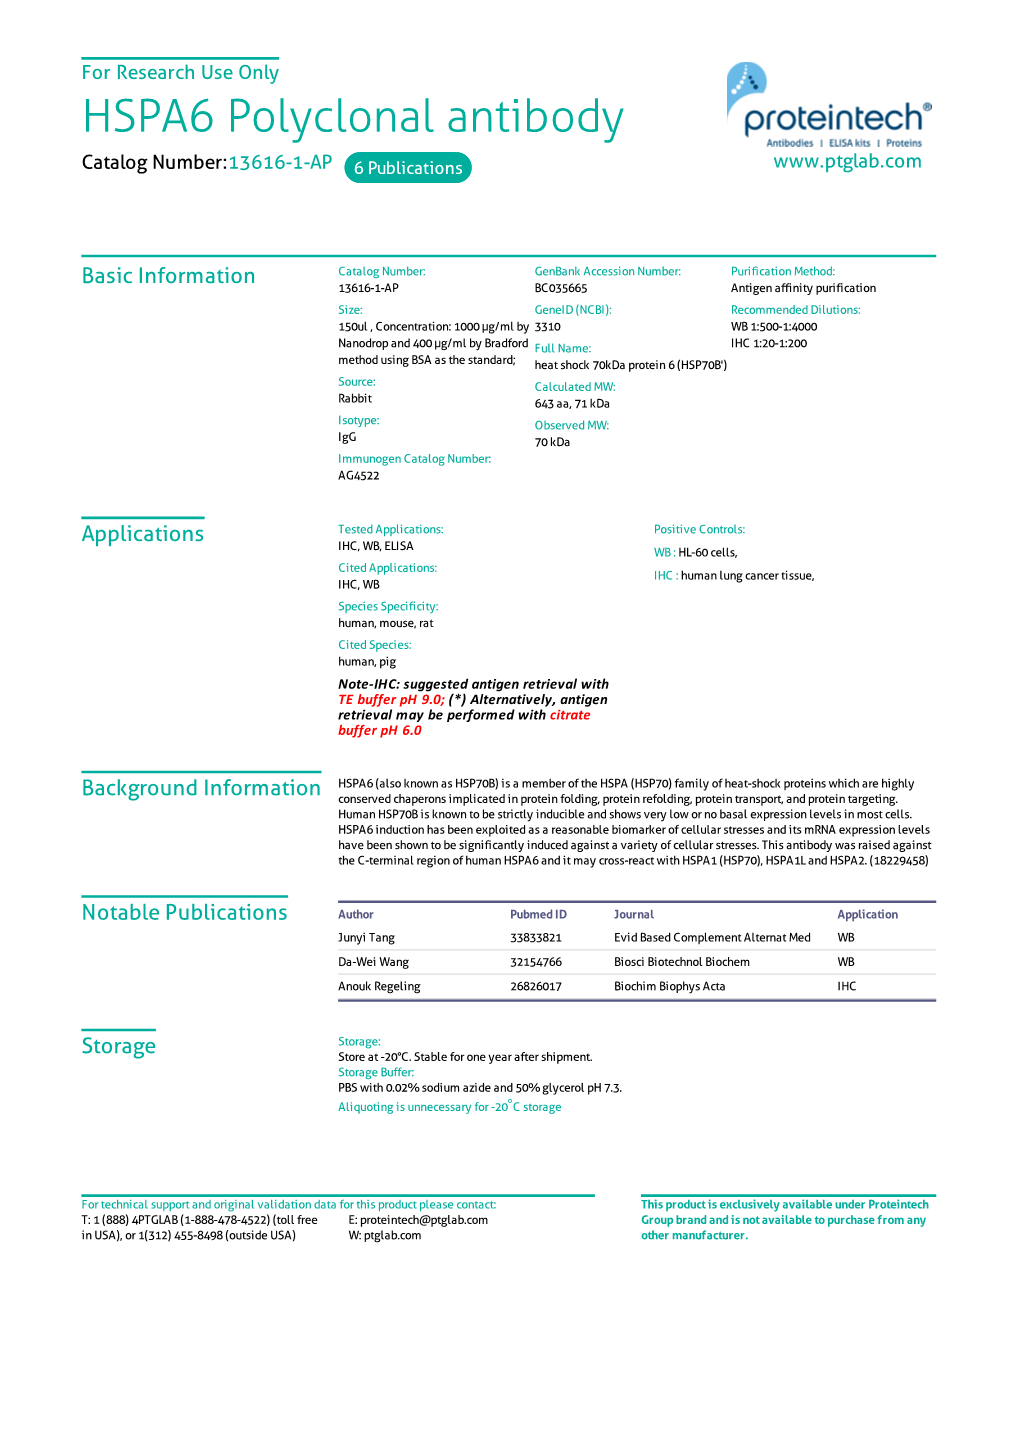 HSPA6 Polyclonal Antibody Catalog Number:13616-1-AP 6 Publications